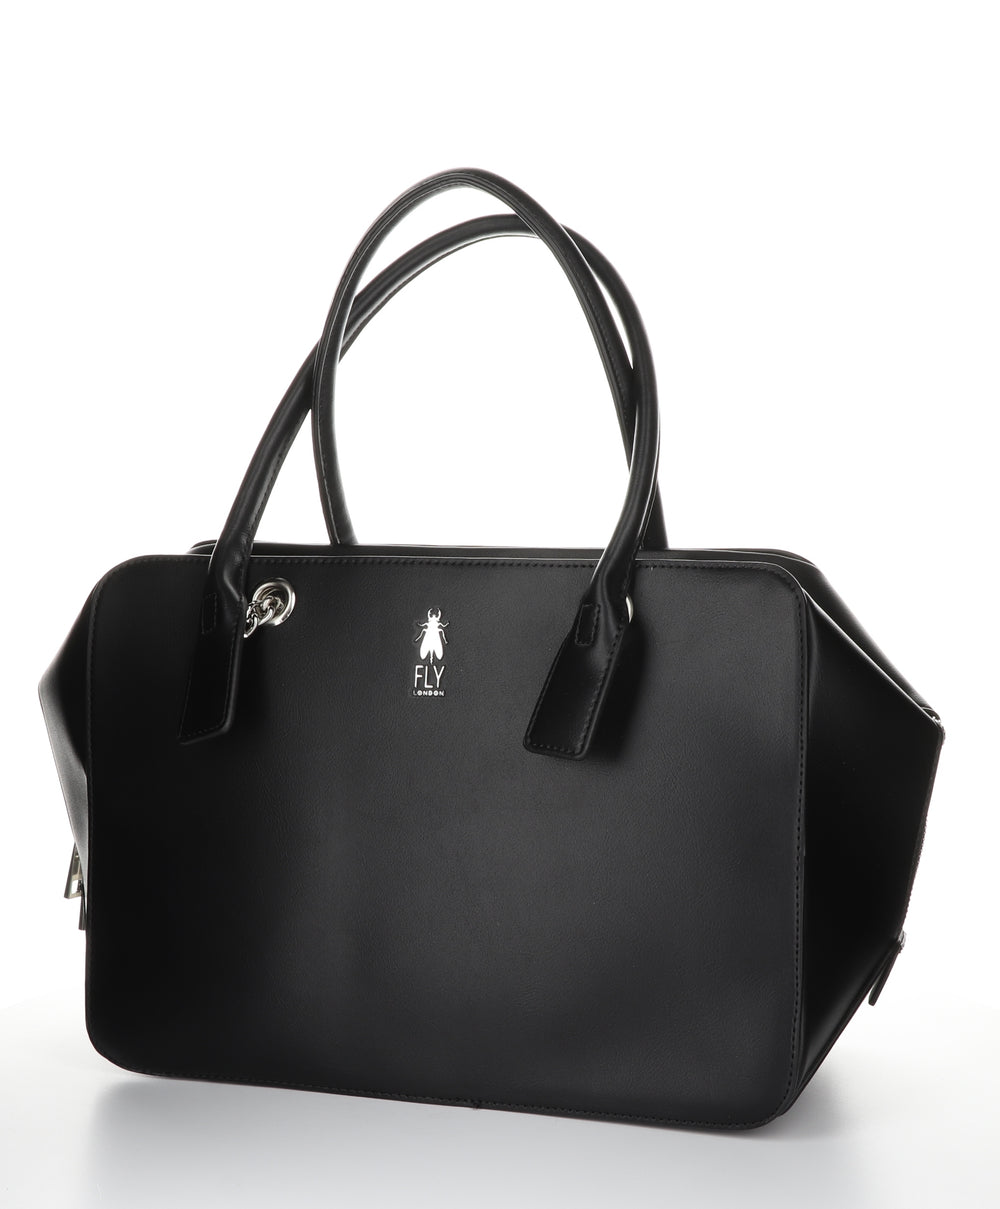 AVES698FLY BLACK Handbag Bags